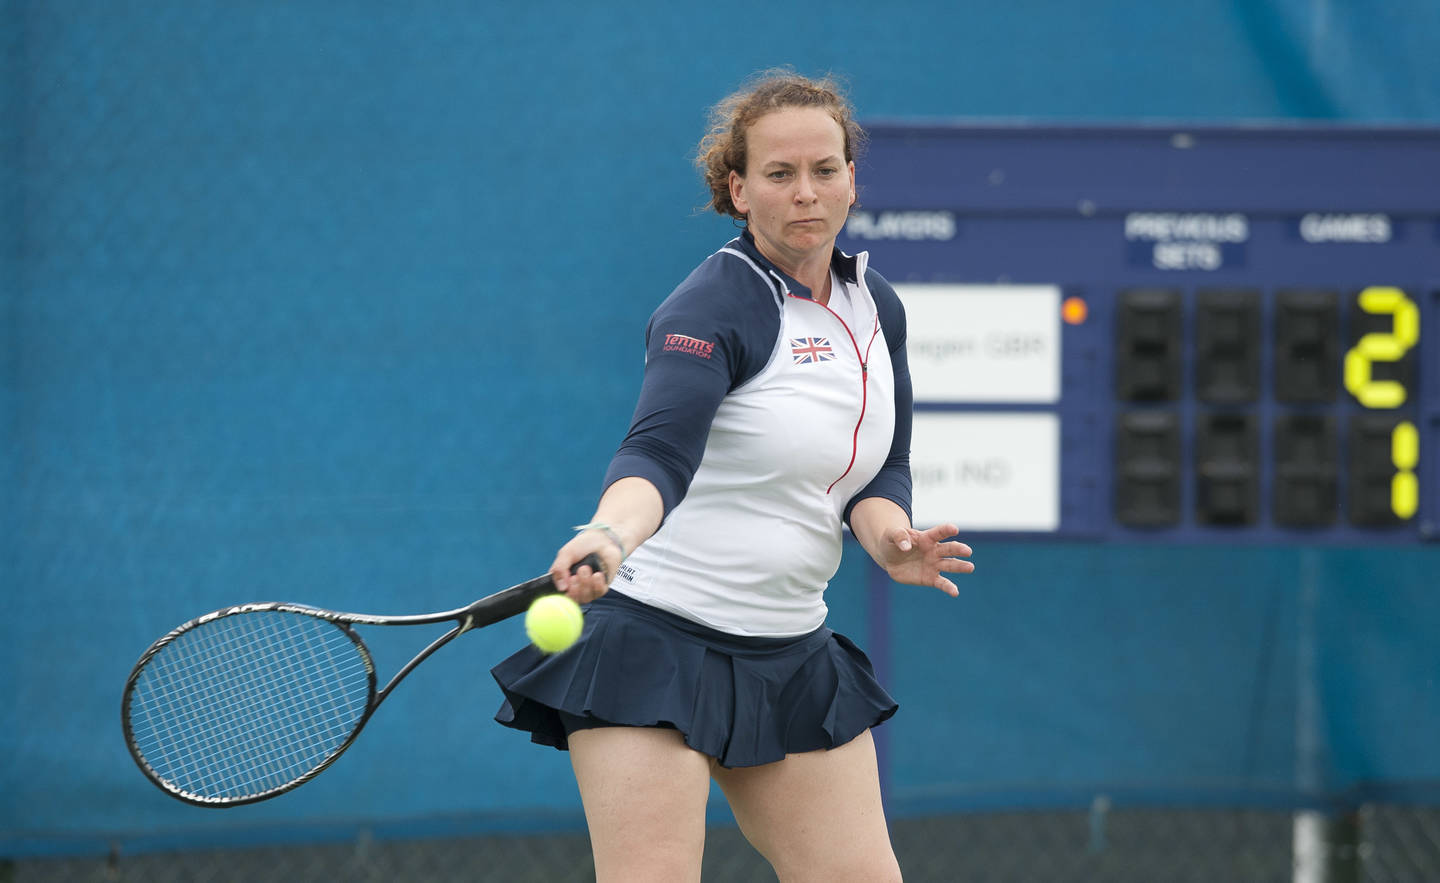 Valerie Copenhagen playing tennis for Great Britain